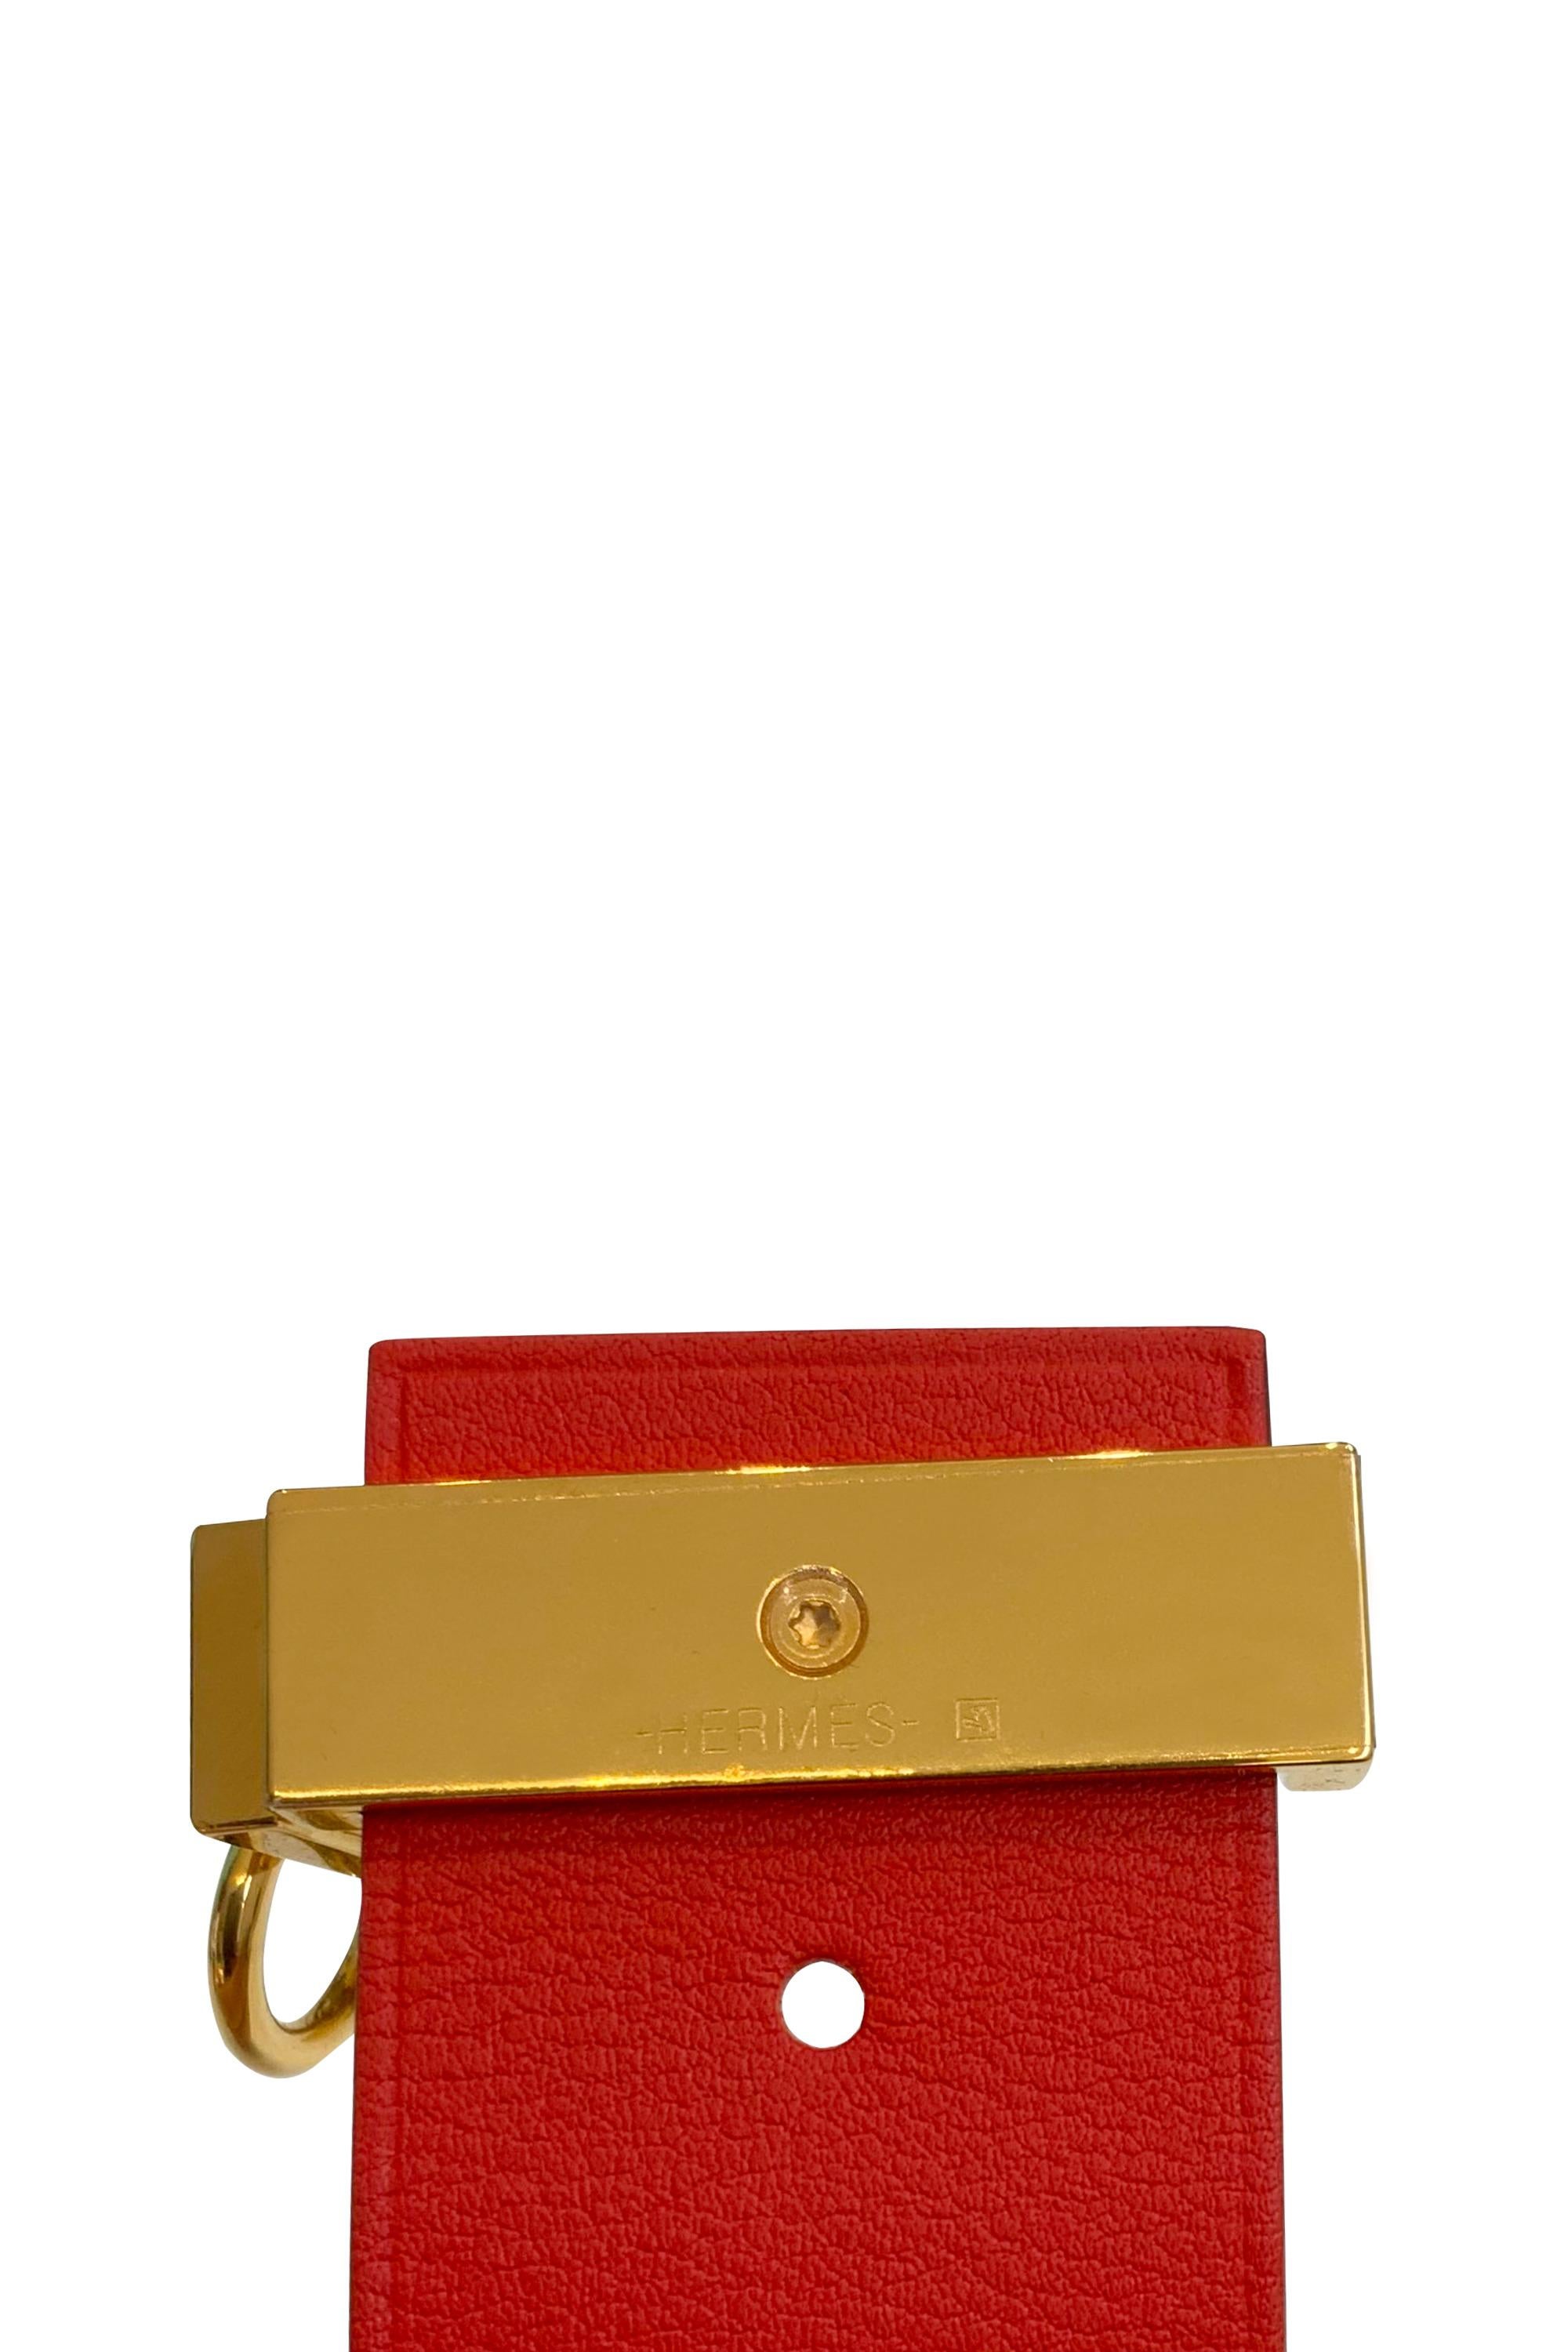 Hermès Bicolour Illusion Reversible Bracelet Capucine Red/White GHW For Sale 3